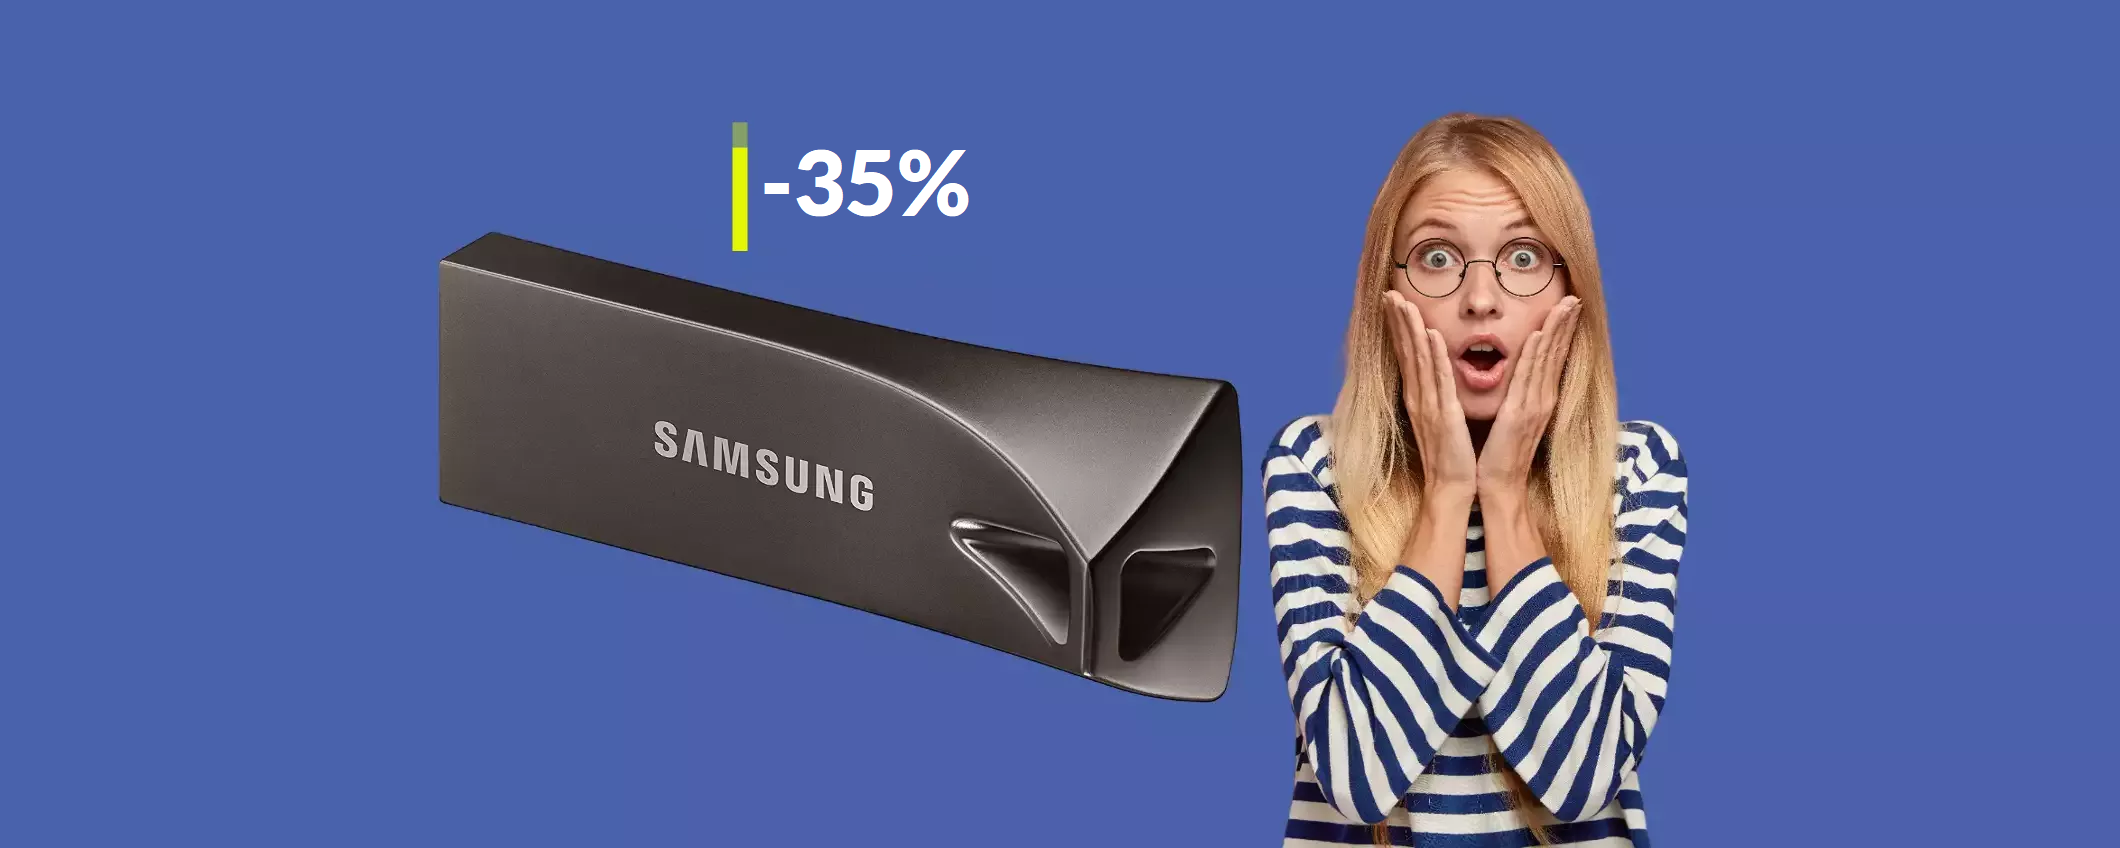 Chiavetta USB 128GB Samsung: best buy da non perdere a 25€